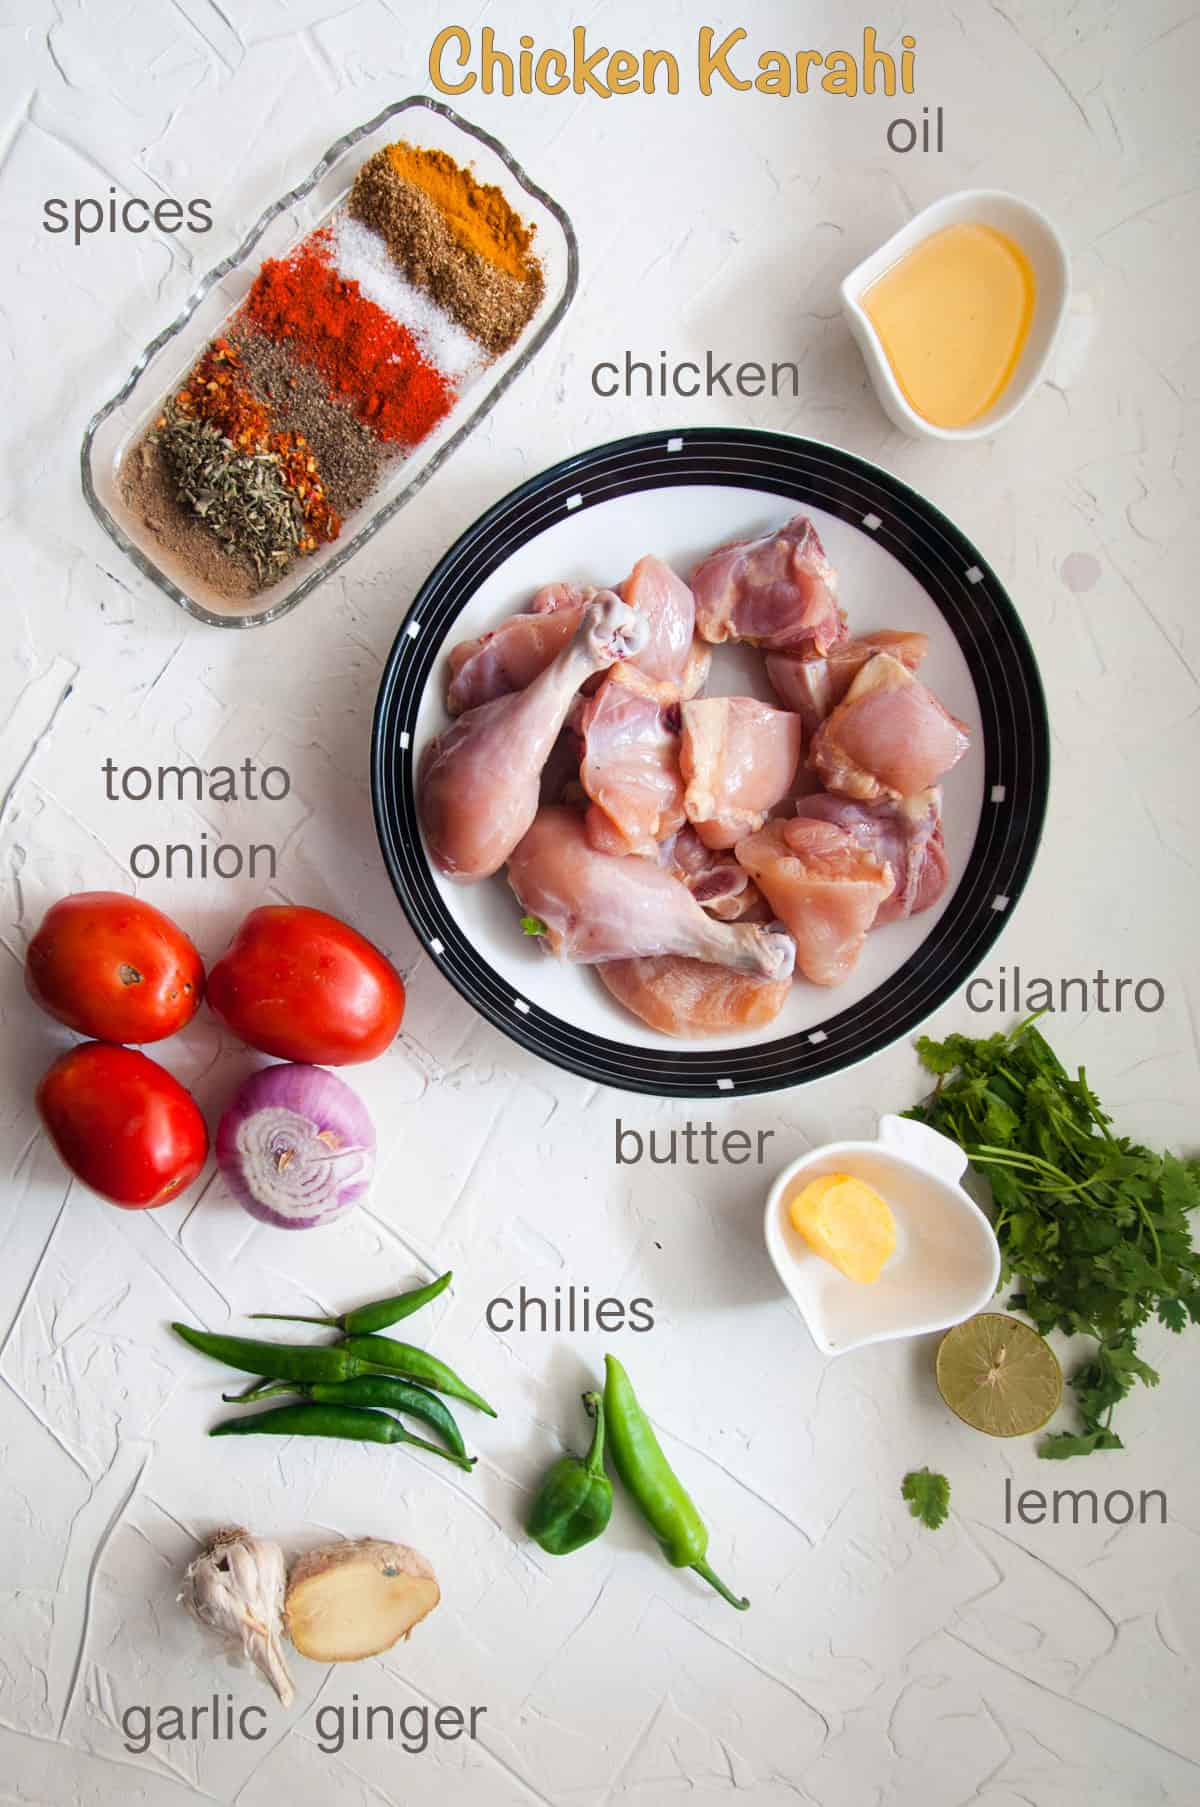 Ingredients for chicken Karahi